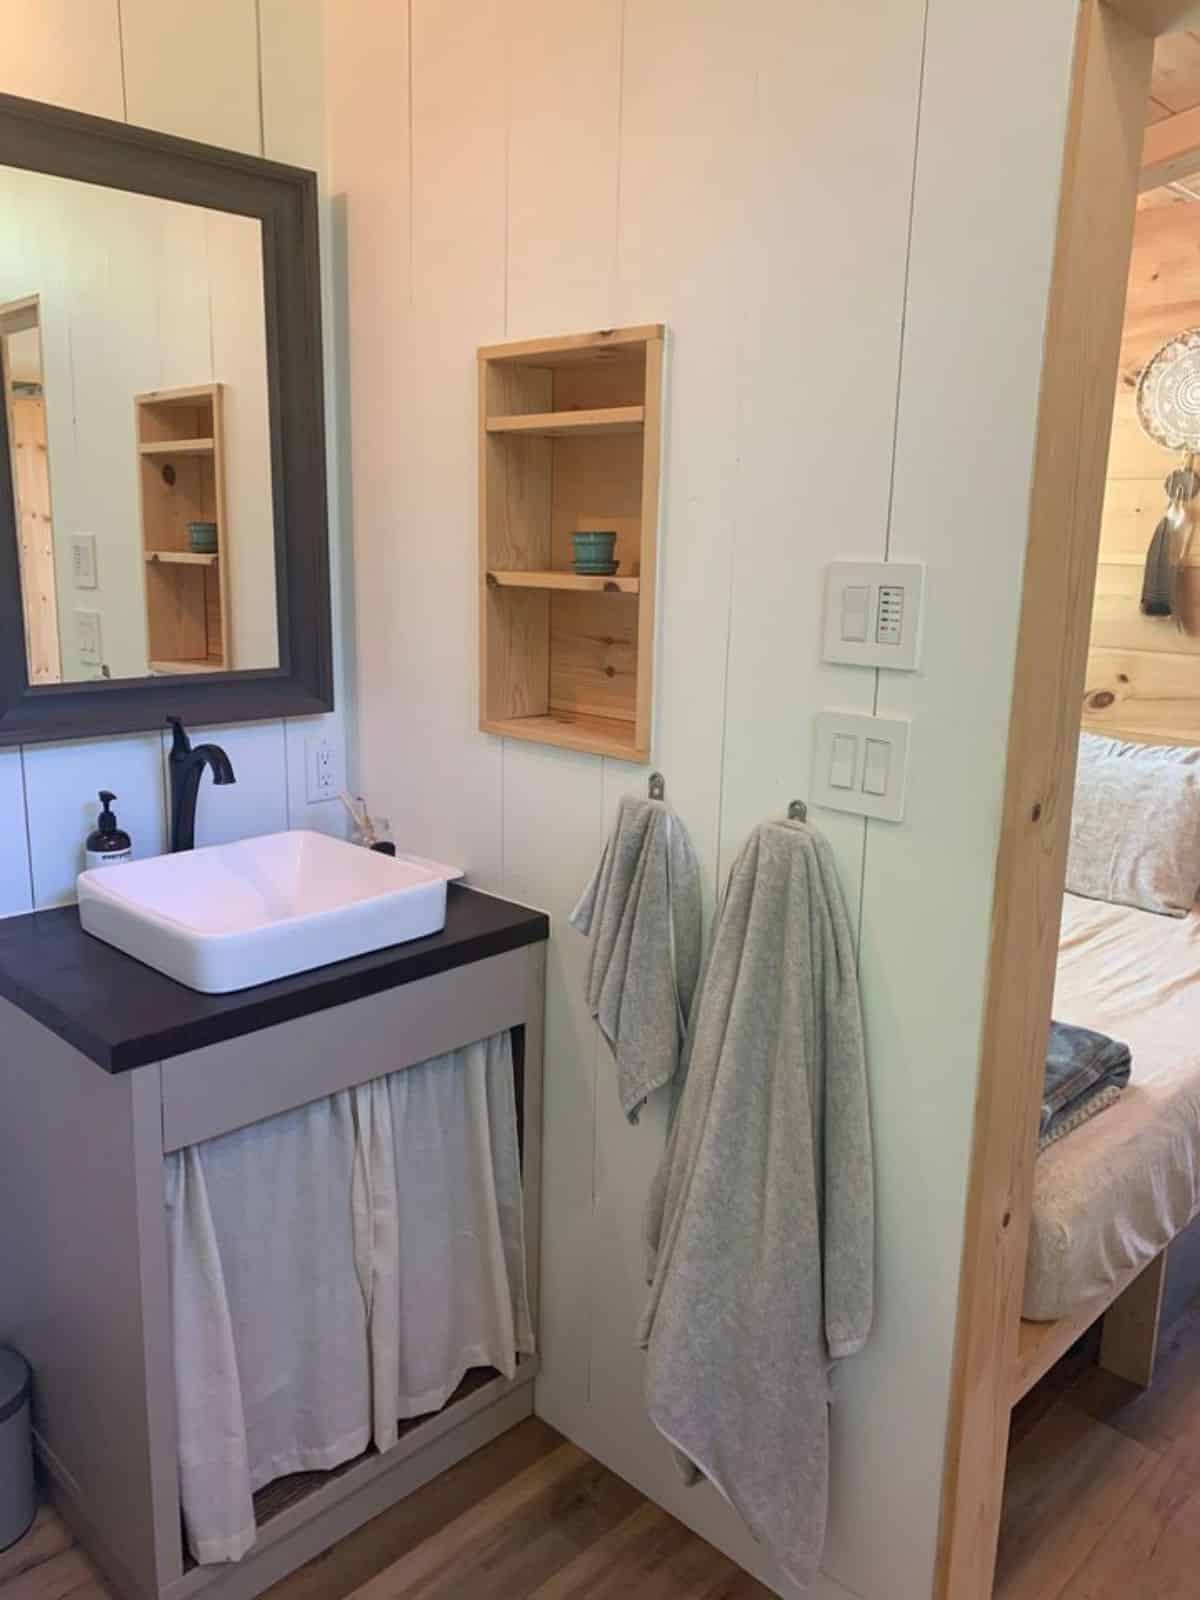 sink with vanity in bathroom of 28’ custom tiny home